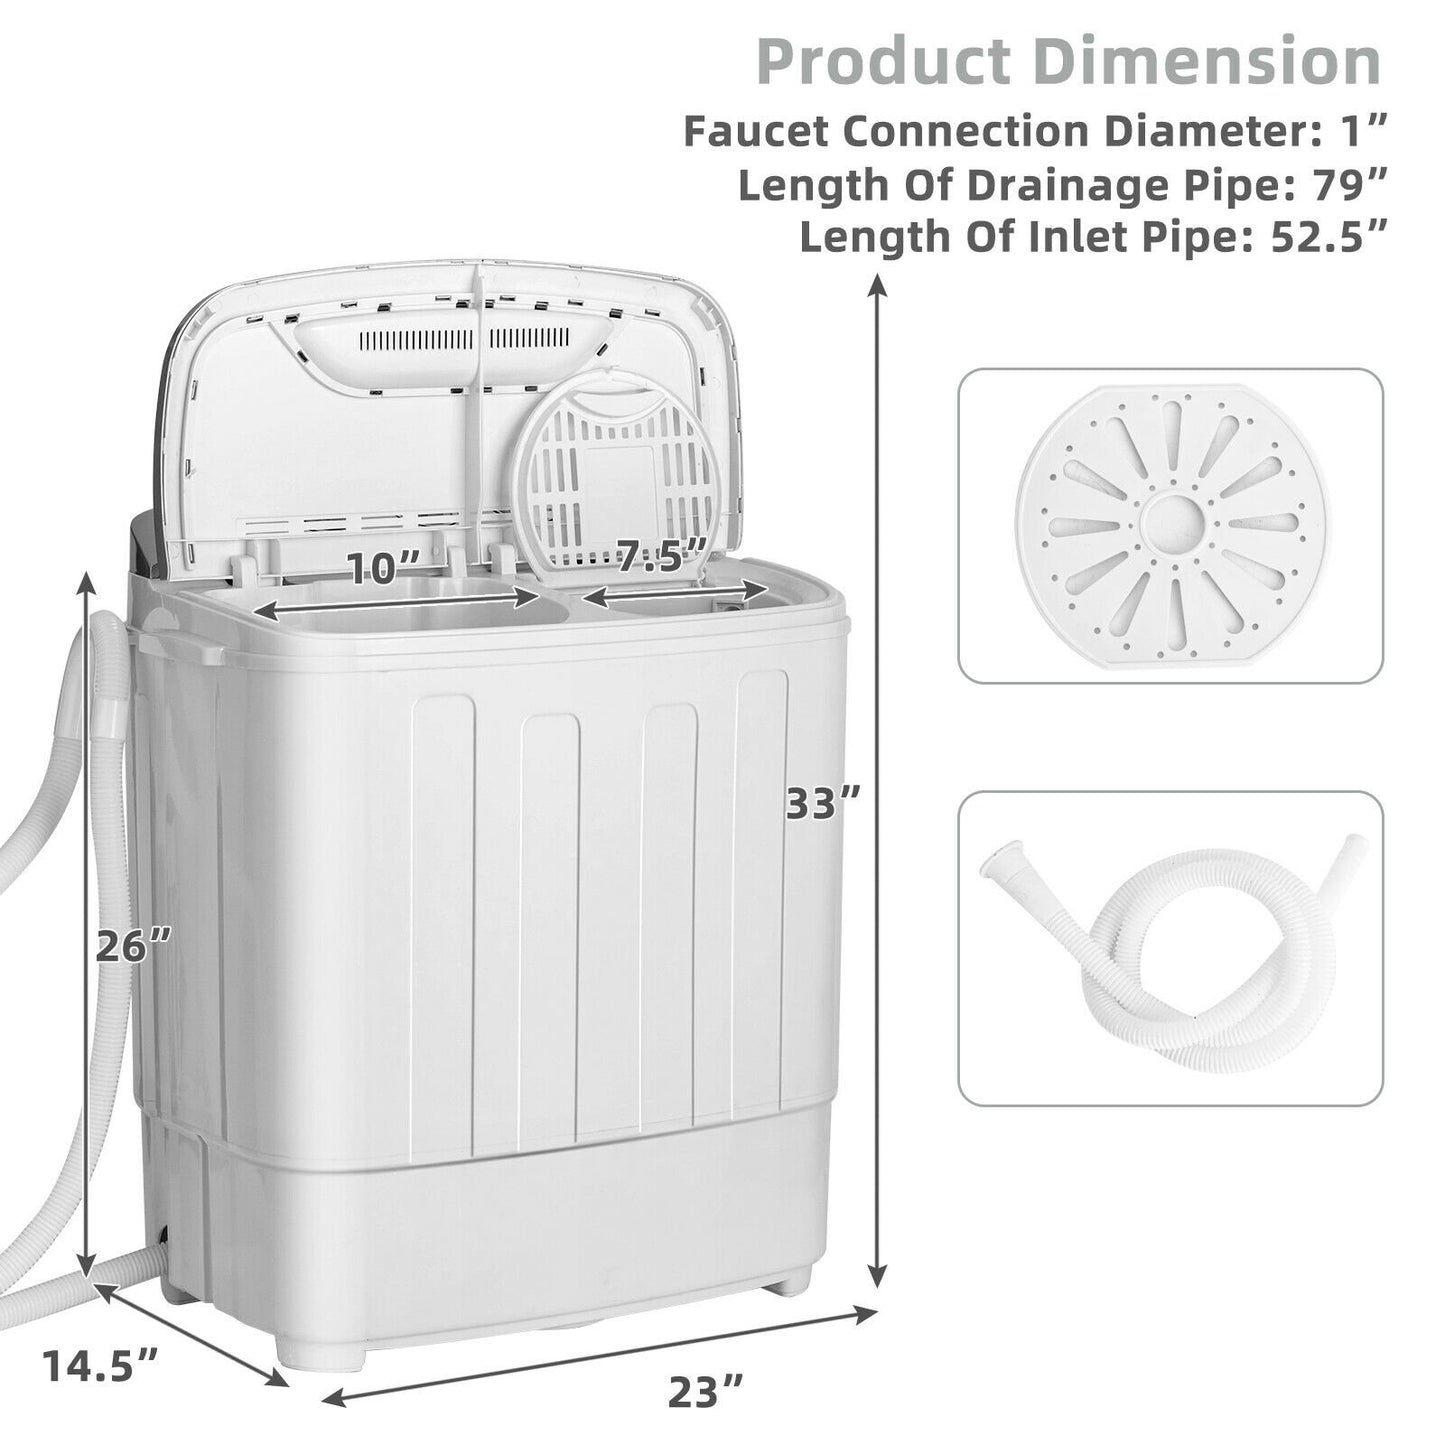 8 lbs Portable Mini Twin Tub Spinner Semi-Automatic Washing Machine, Gray